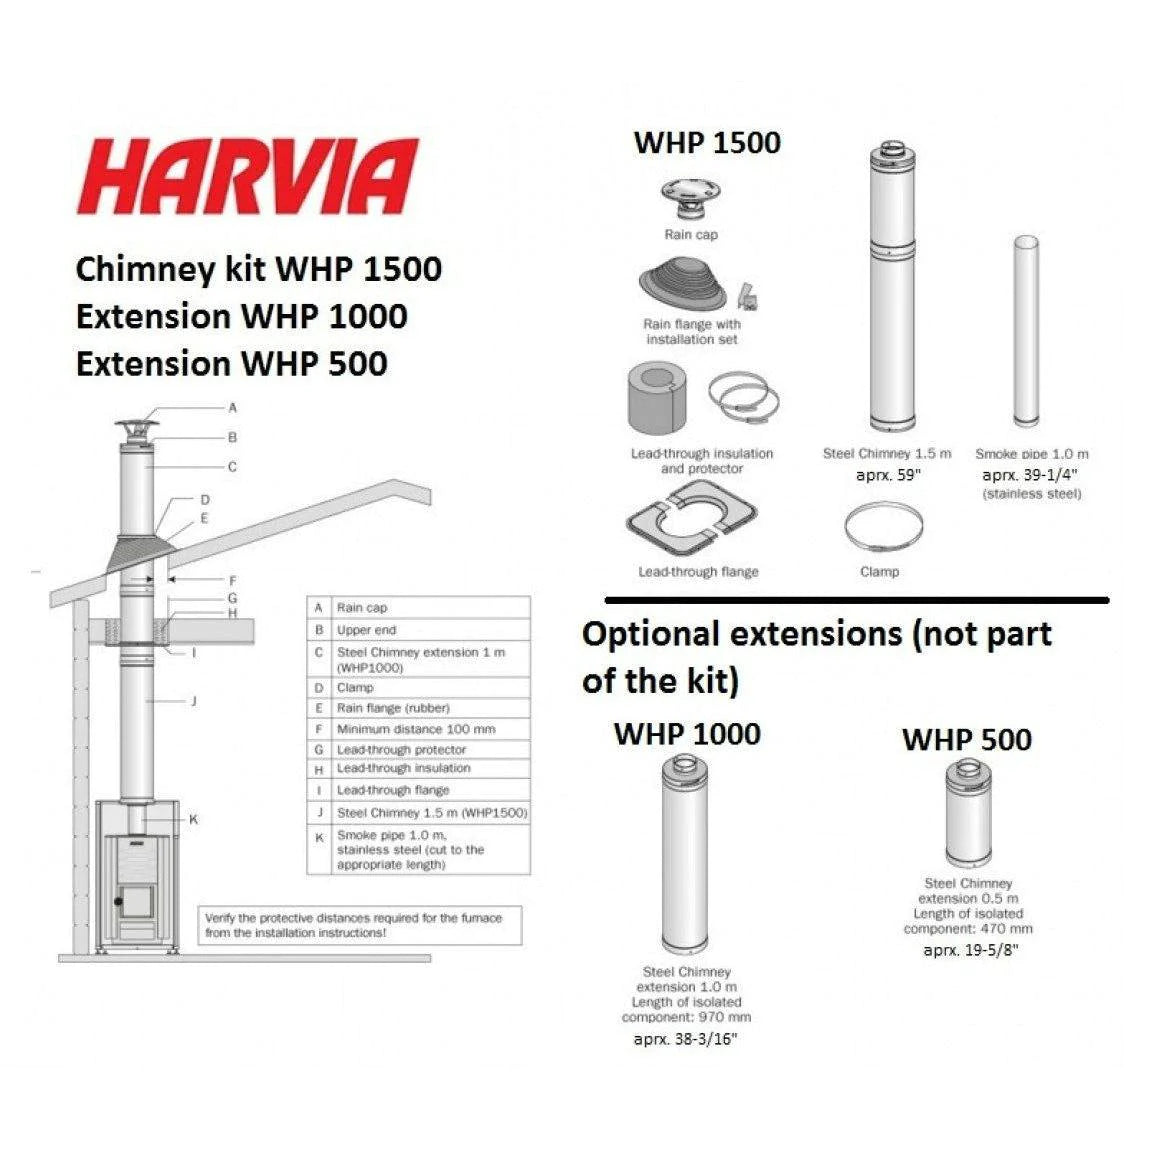 Harvia Linear 16 WK160C Wood-Burning Sauna Stove / Heater